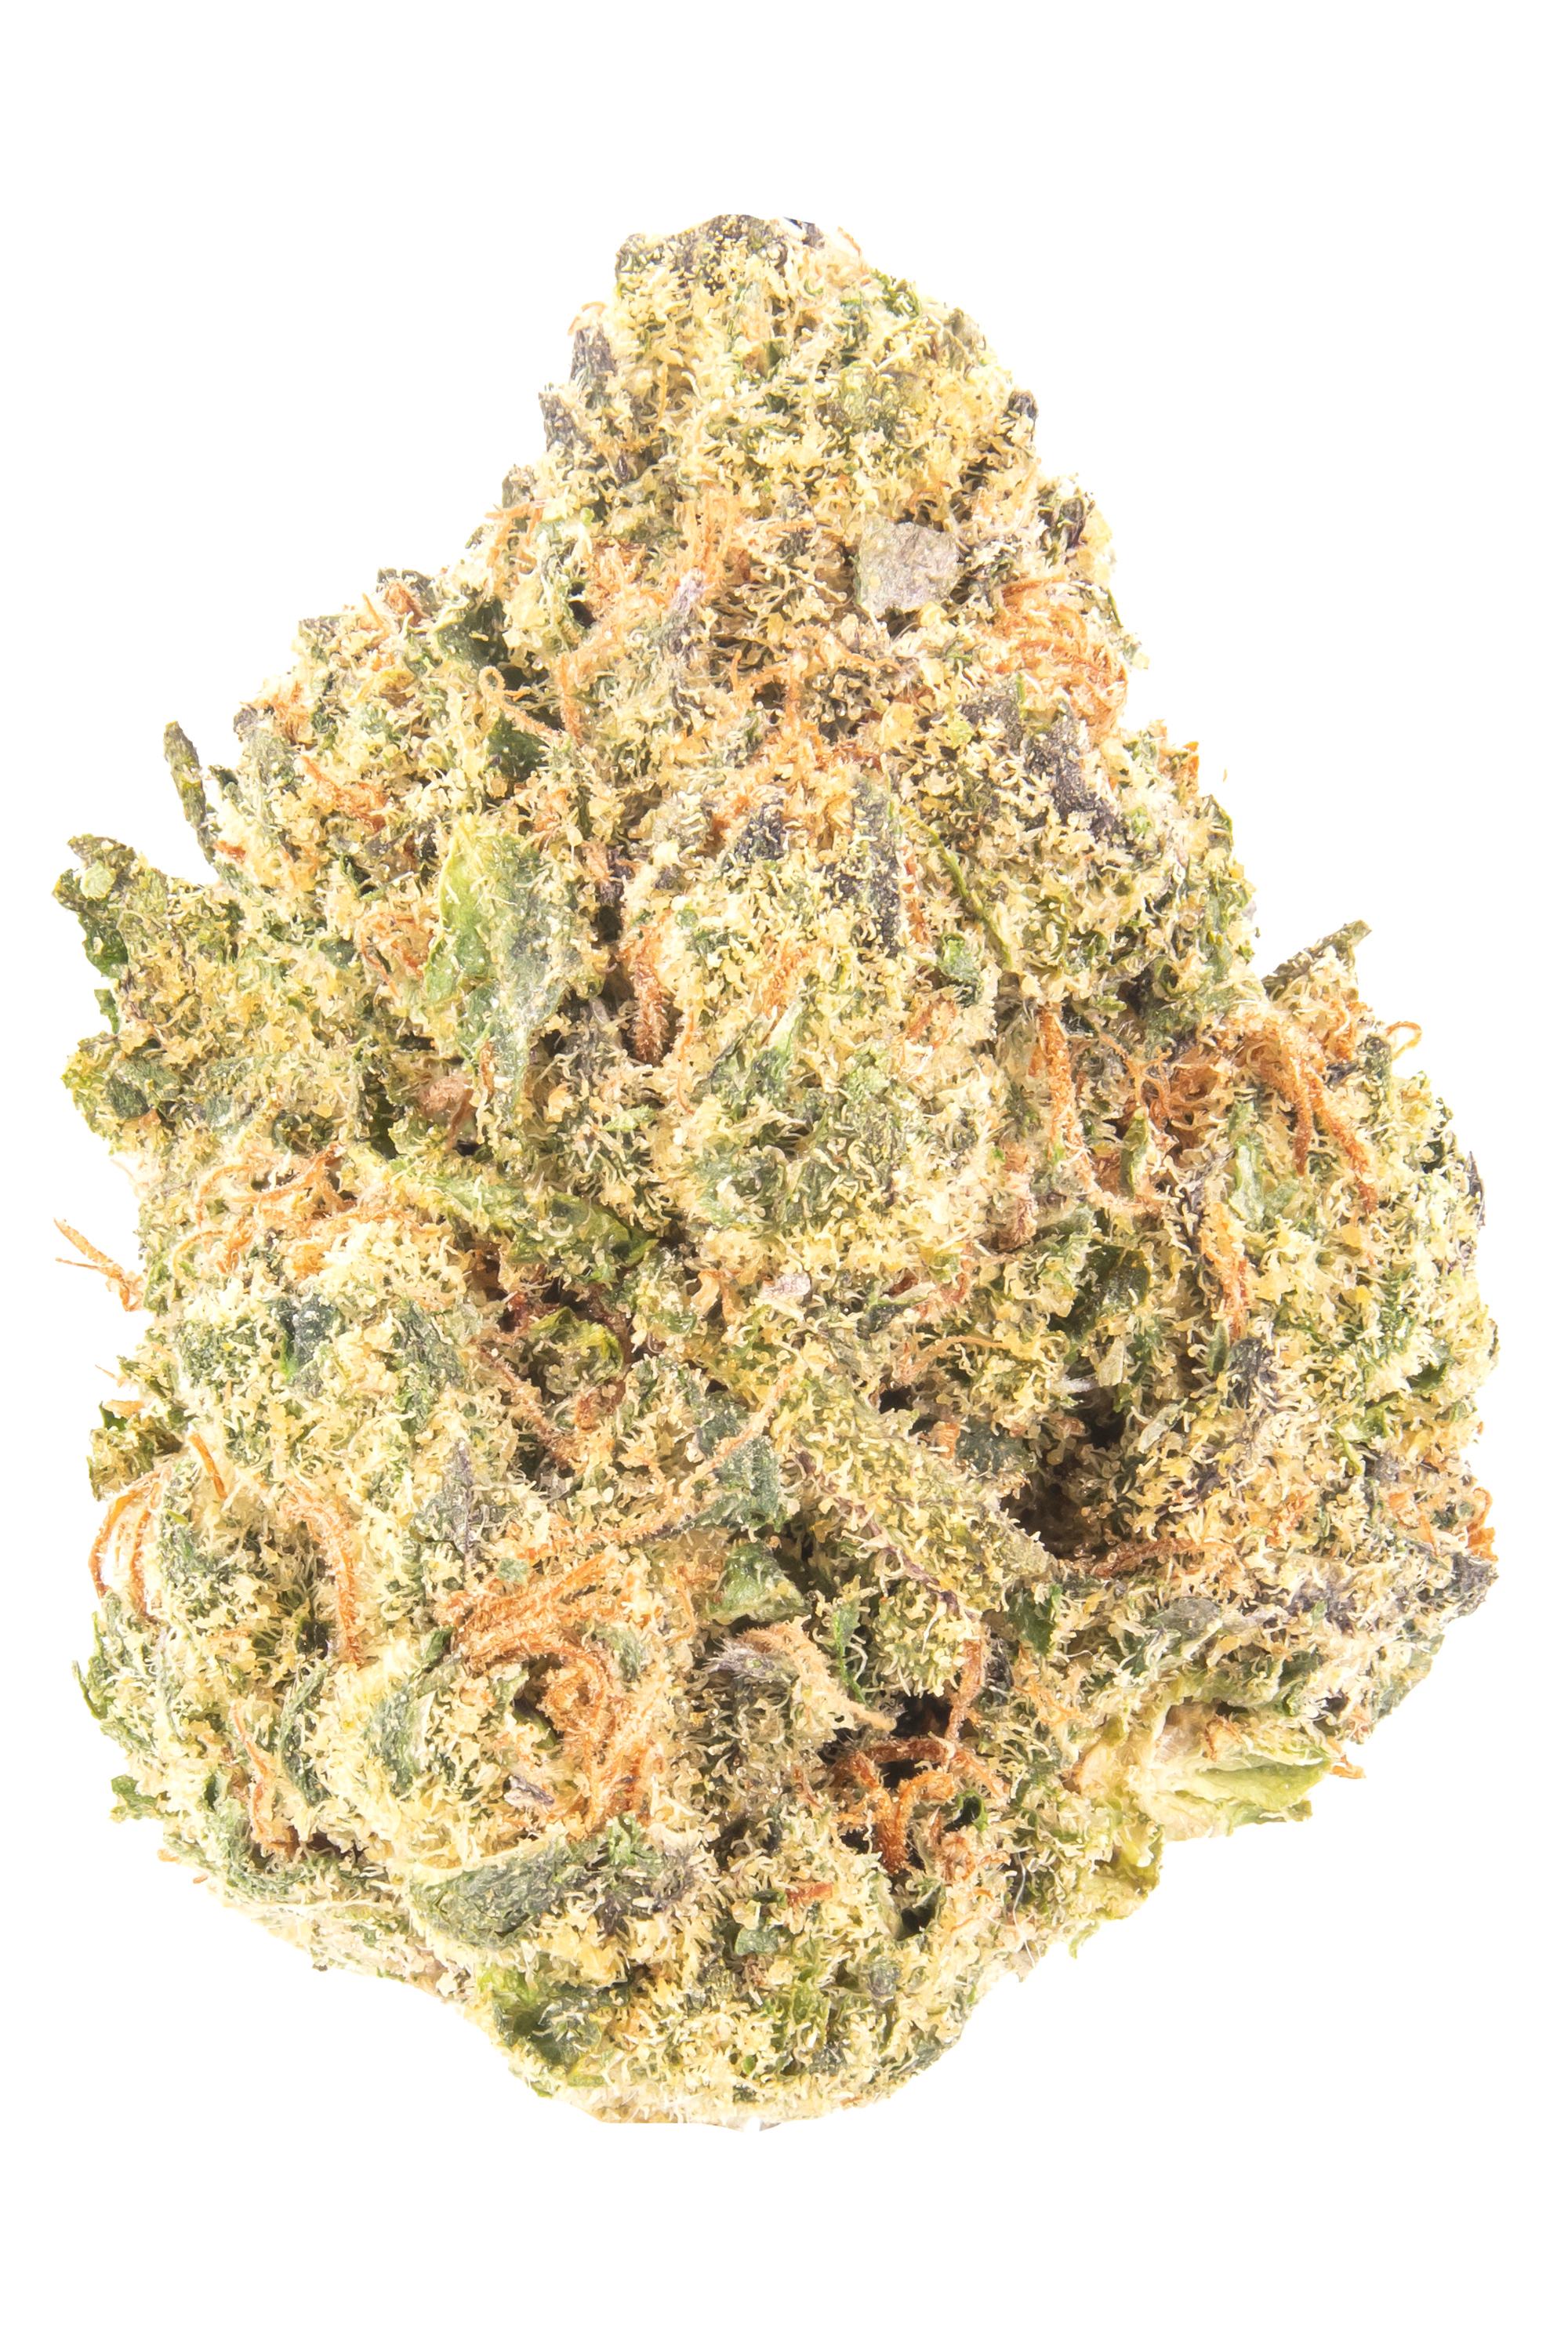 Sherblato - Hybrid Cannabis Strain